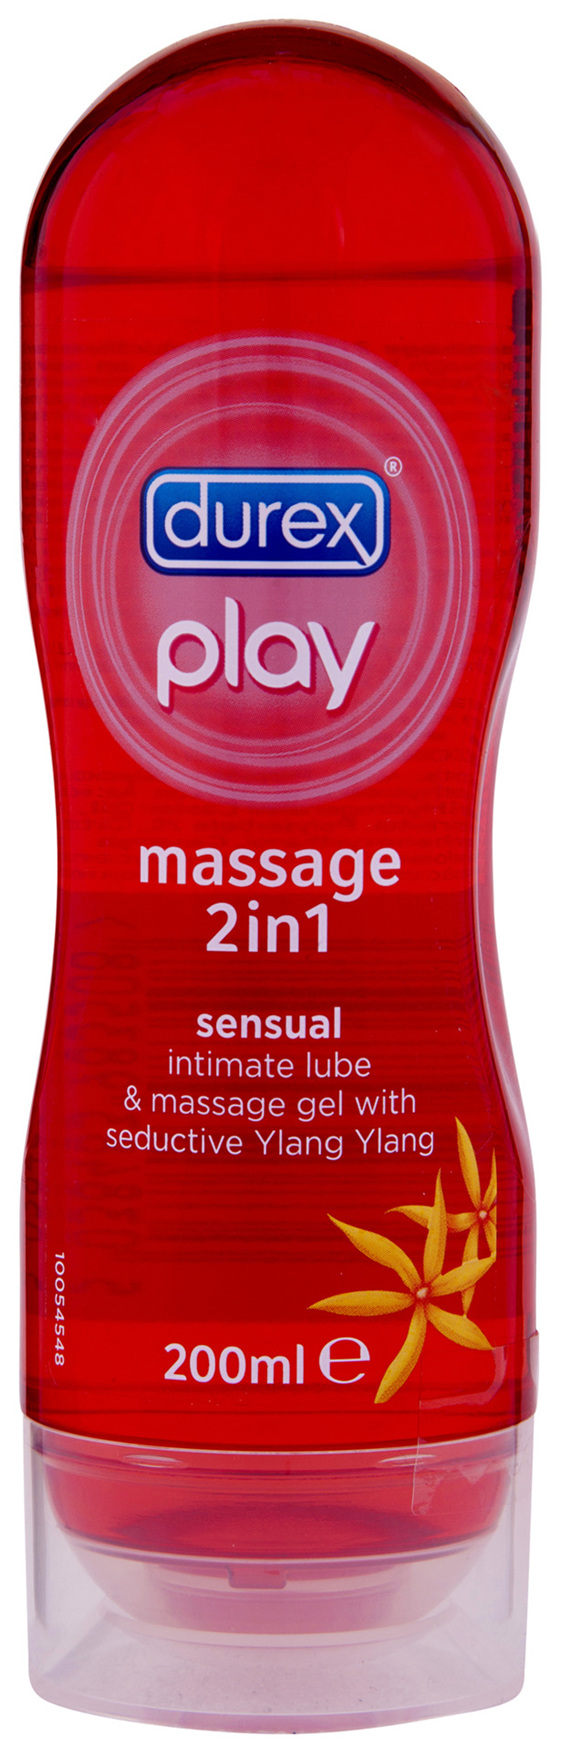 Durex Play Sensual 2 in 1 Massage Gel Intimate Lubricant 200ml